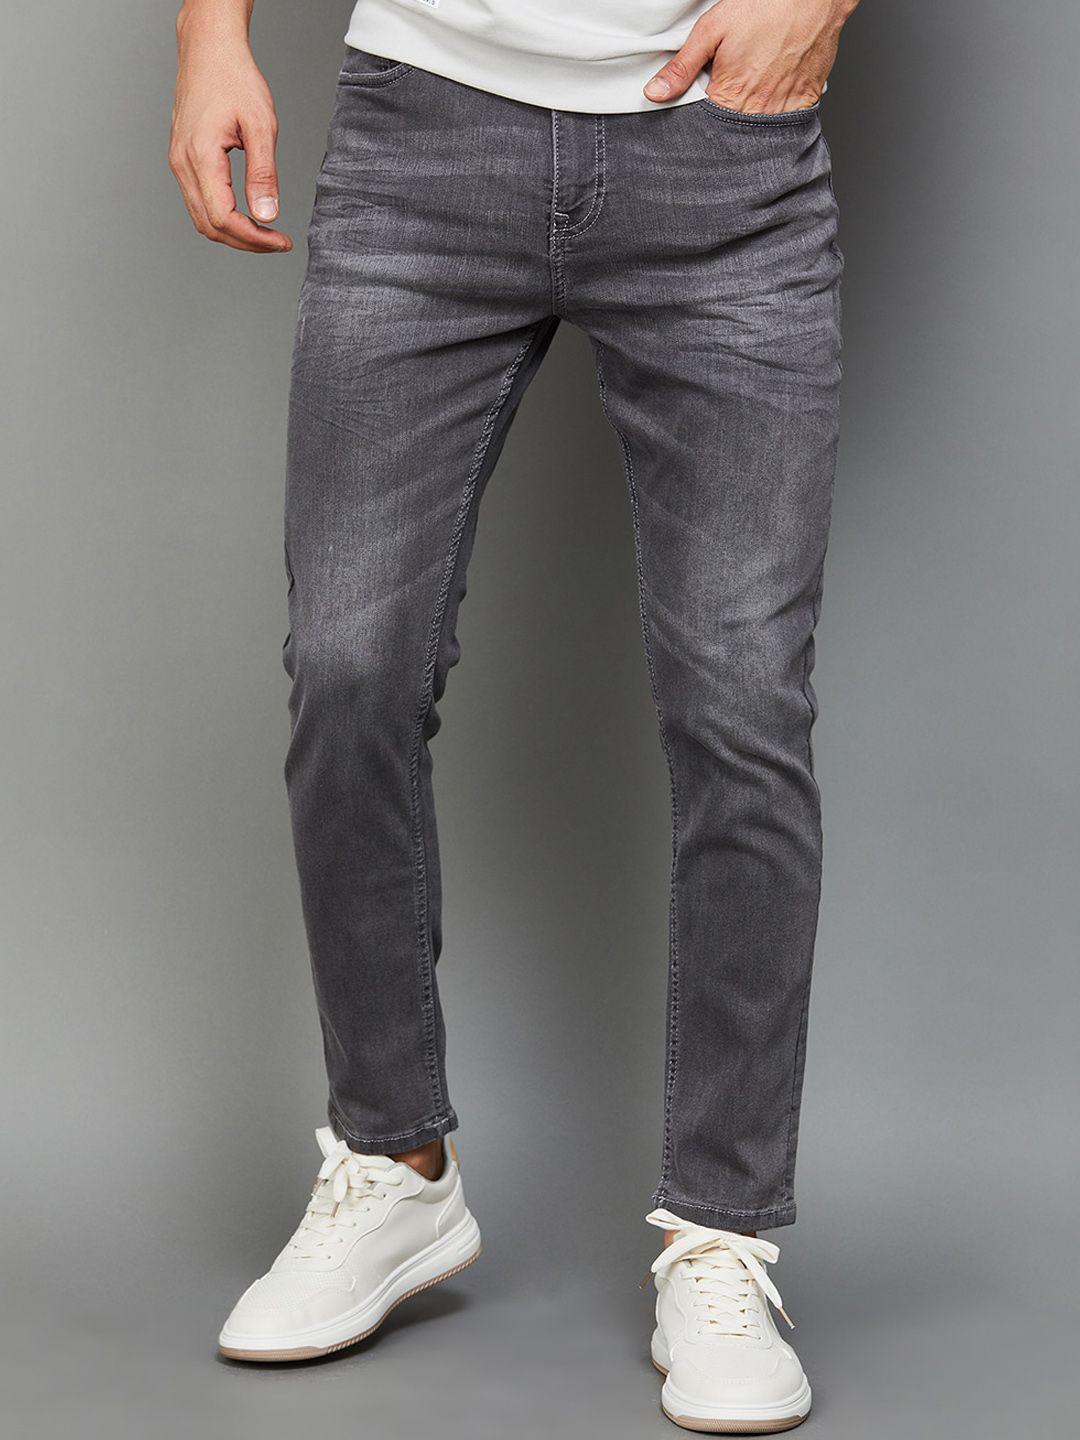 bossini-men-mid-rise-clean-look-jeans